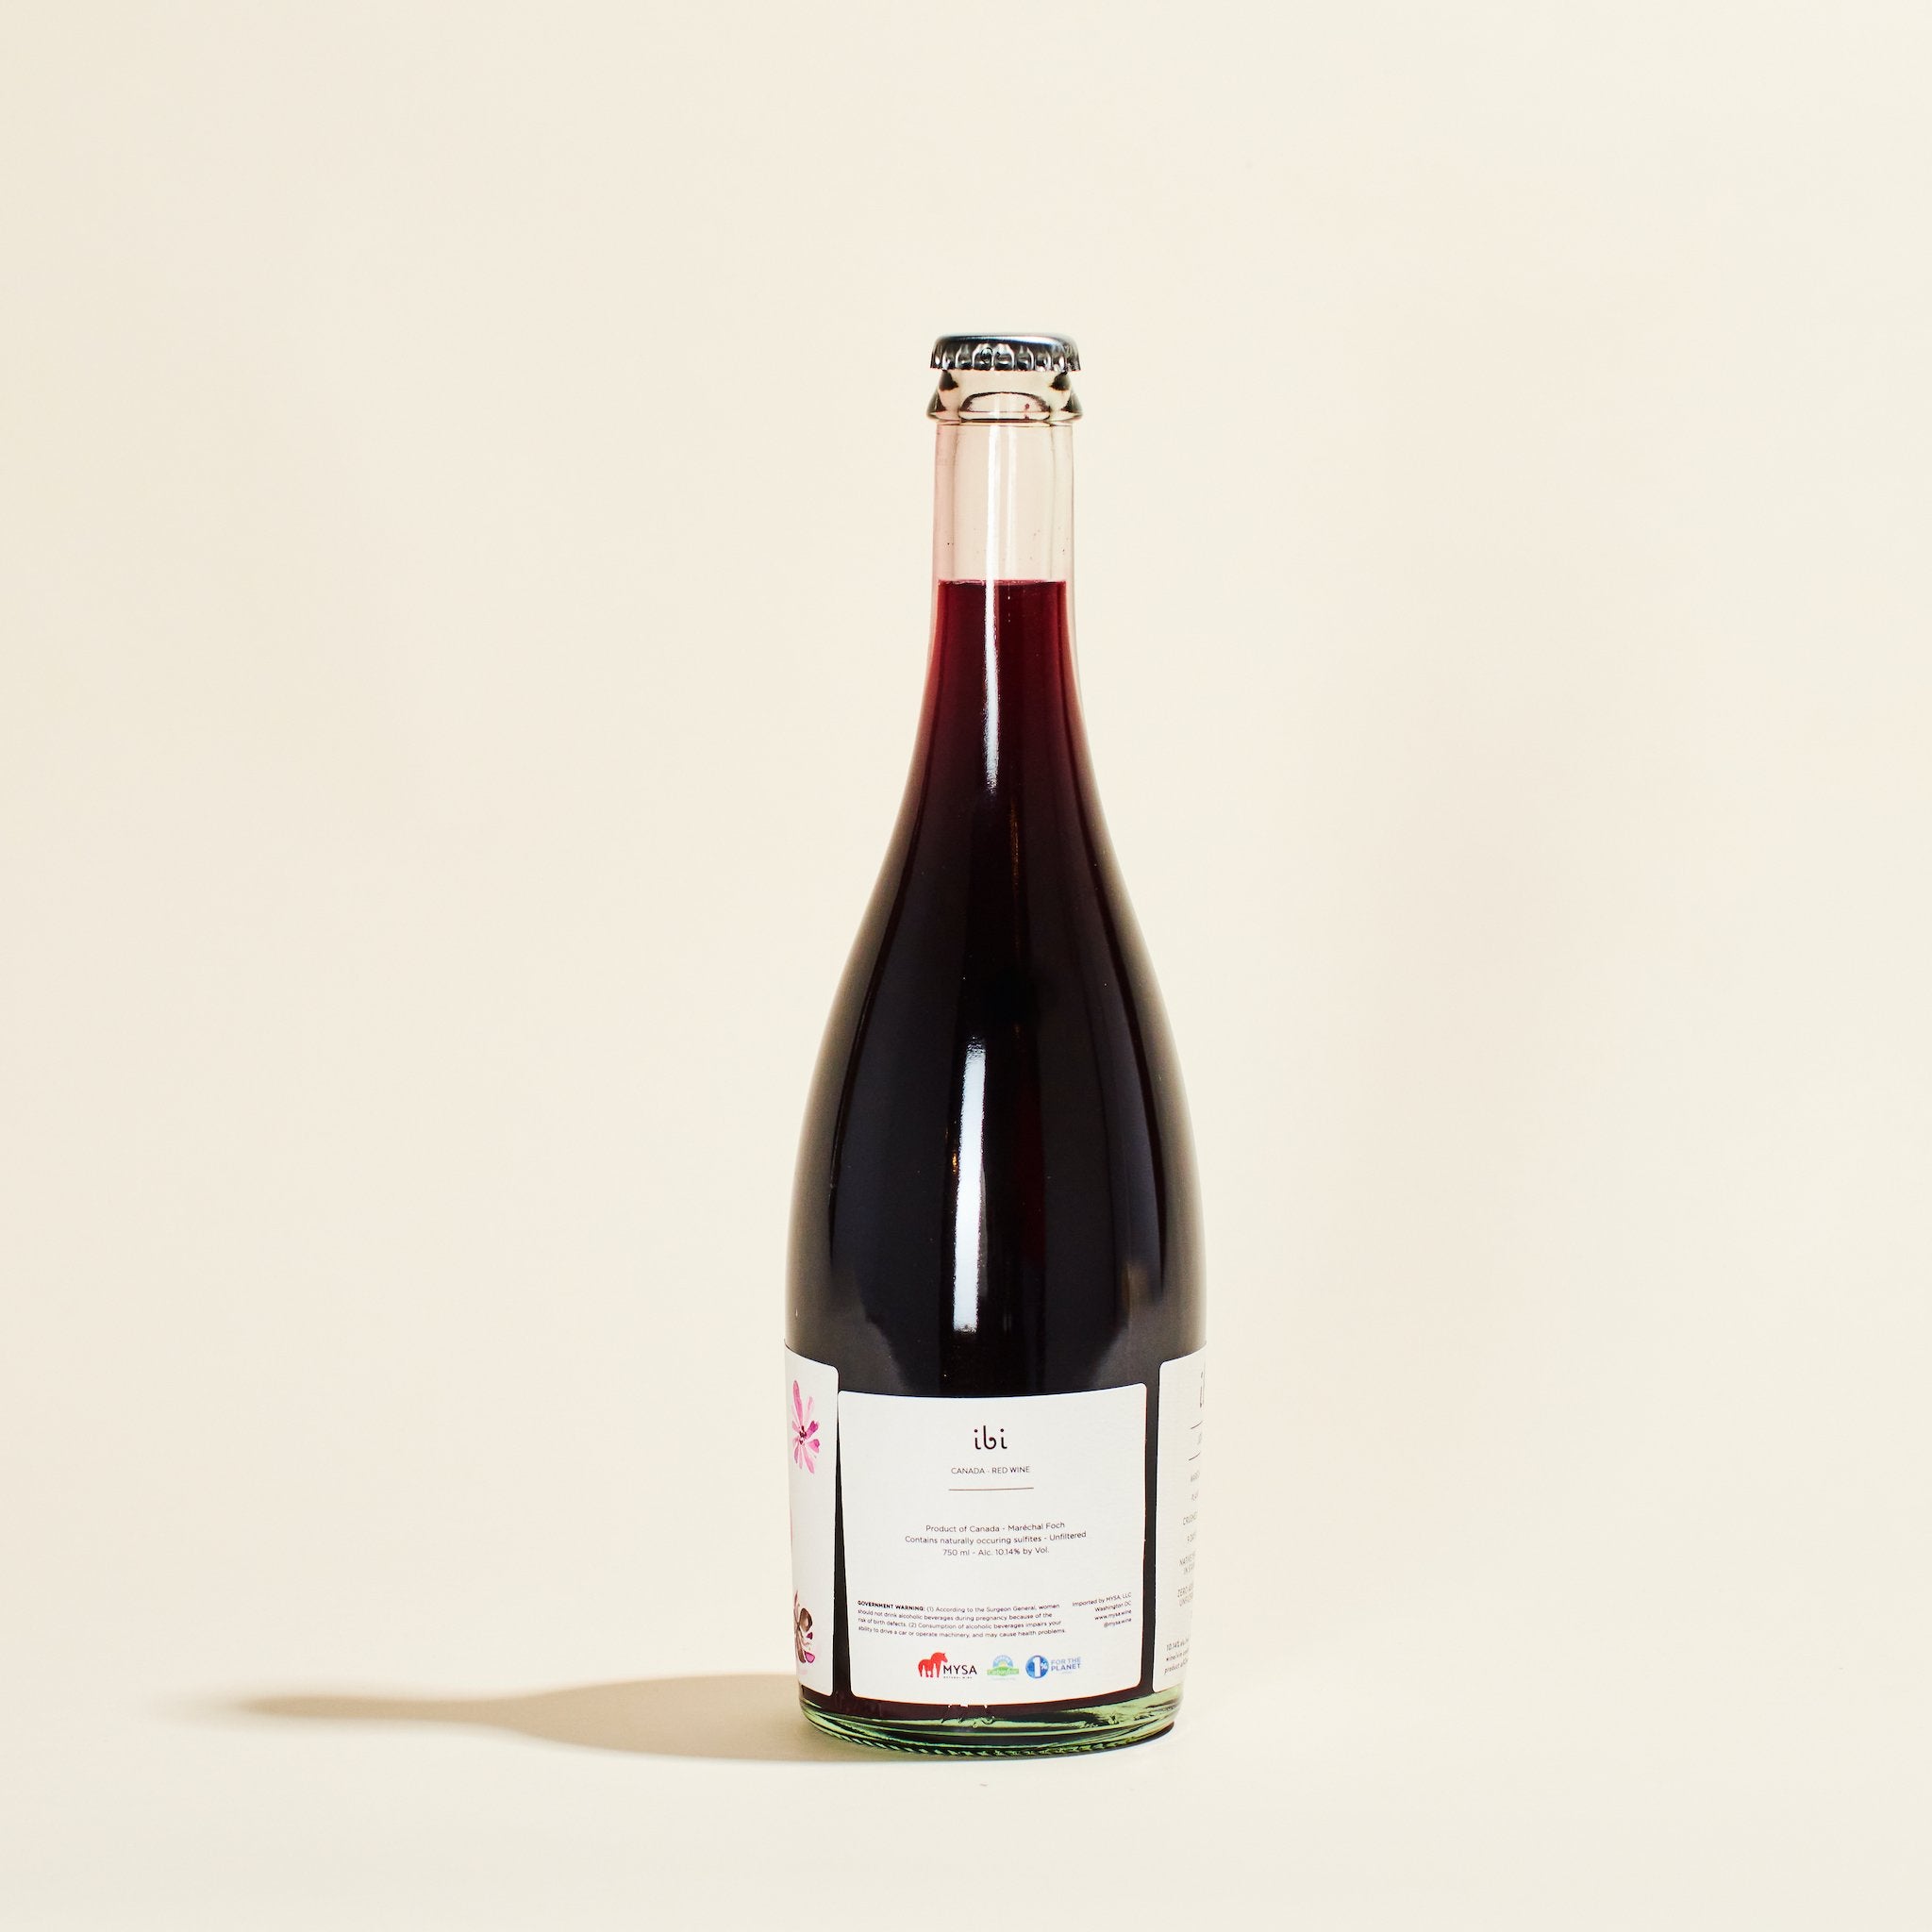 joplin ibi ontario canada natural red wine bottlle label